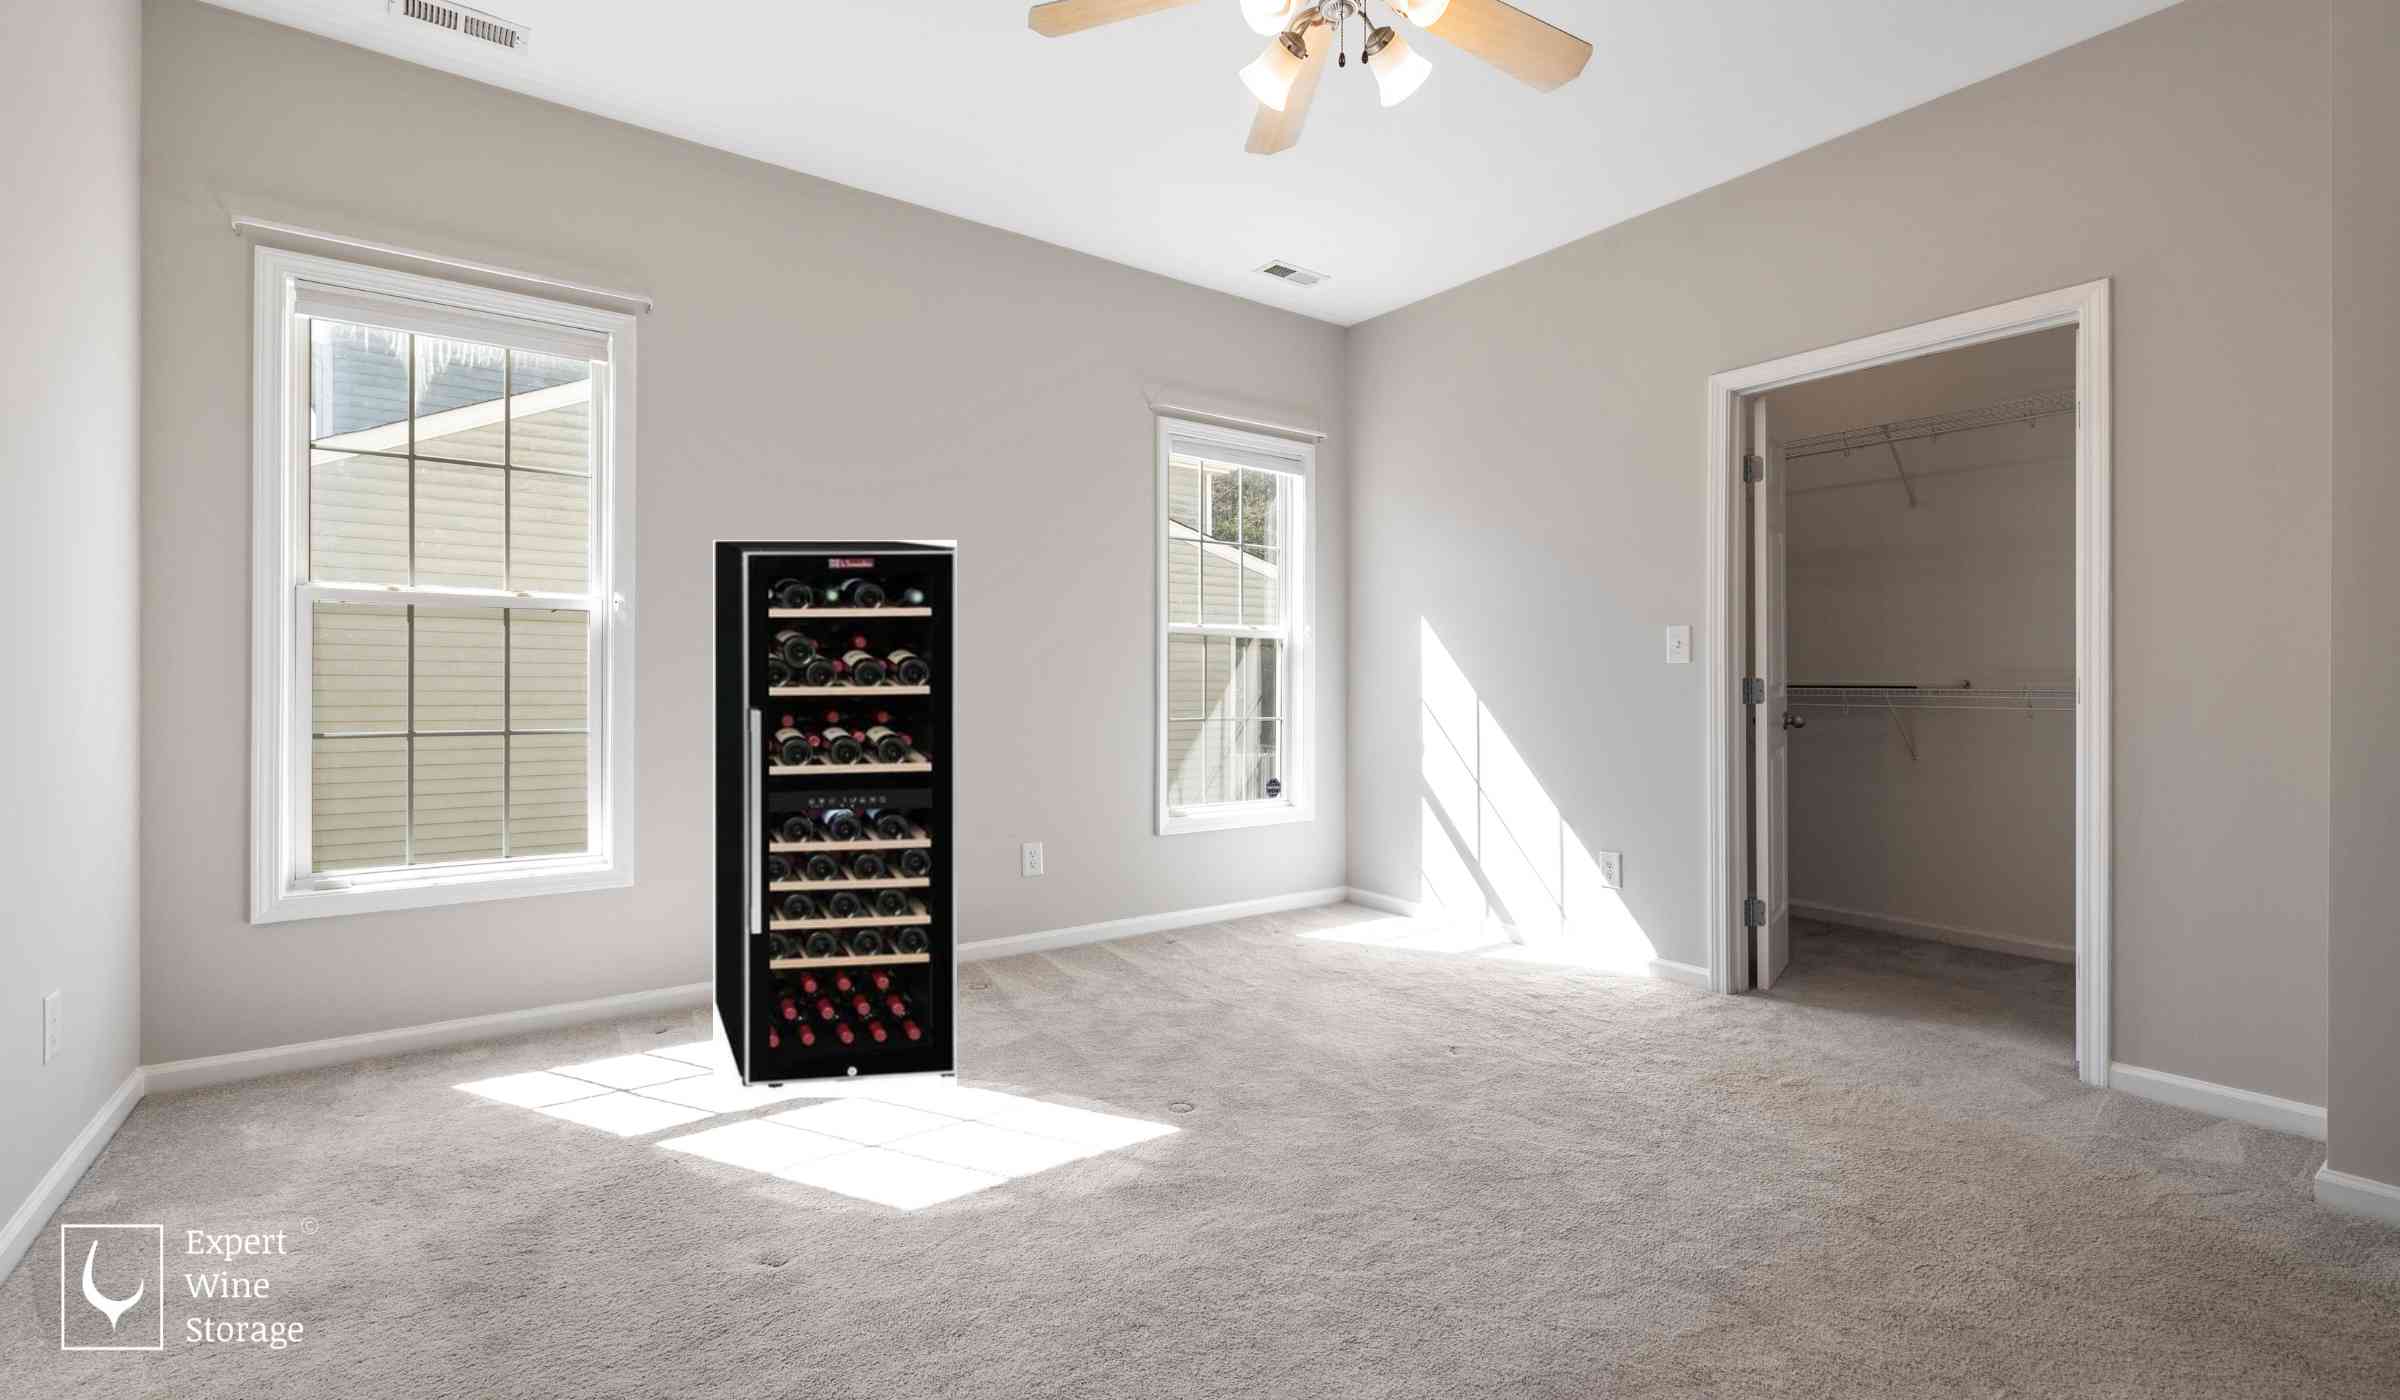 Wine Fridge in a House on Carpet